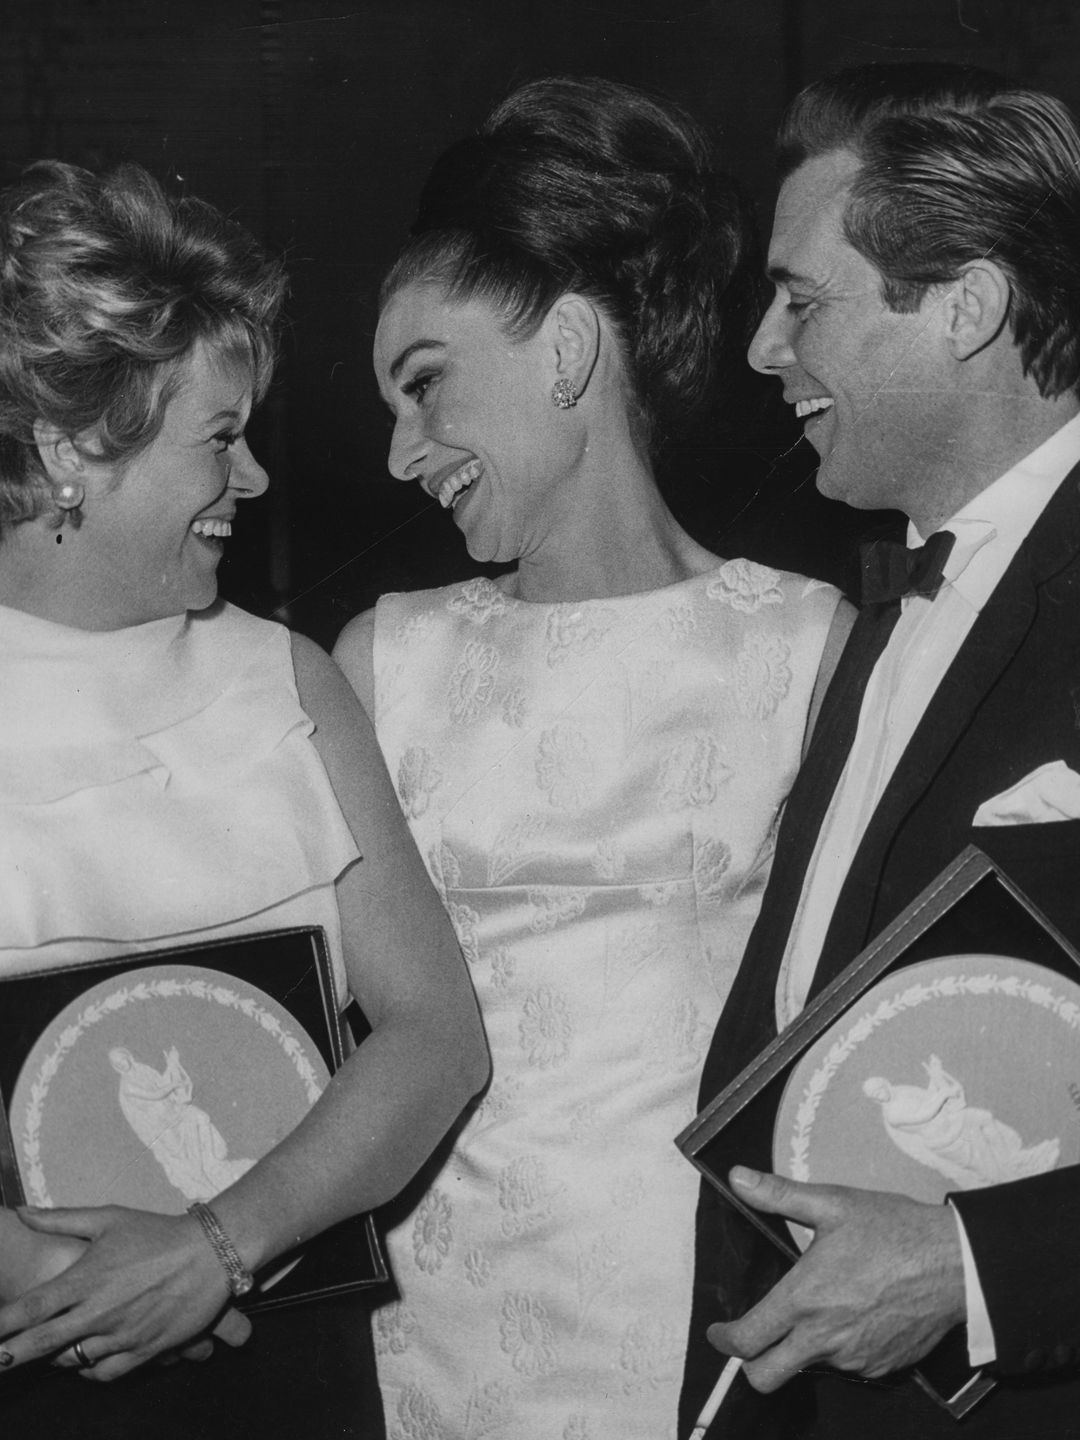 Audrey Hepburn smiling with Rachel Roberts and Dirk Bogarde at the BAFTAs 